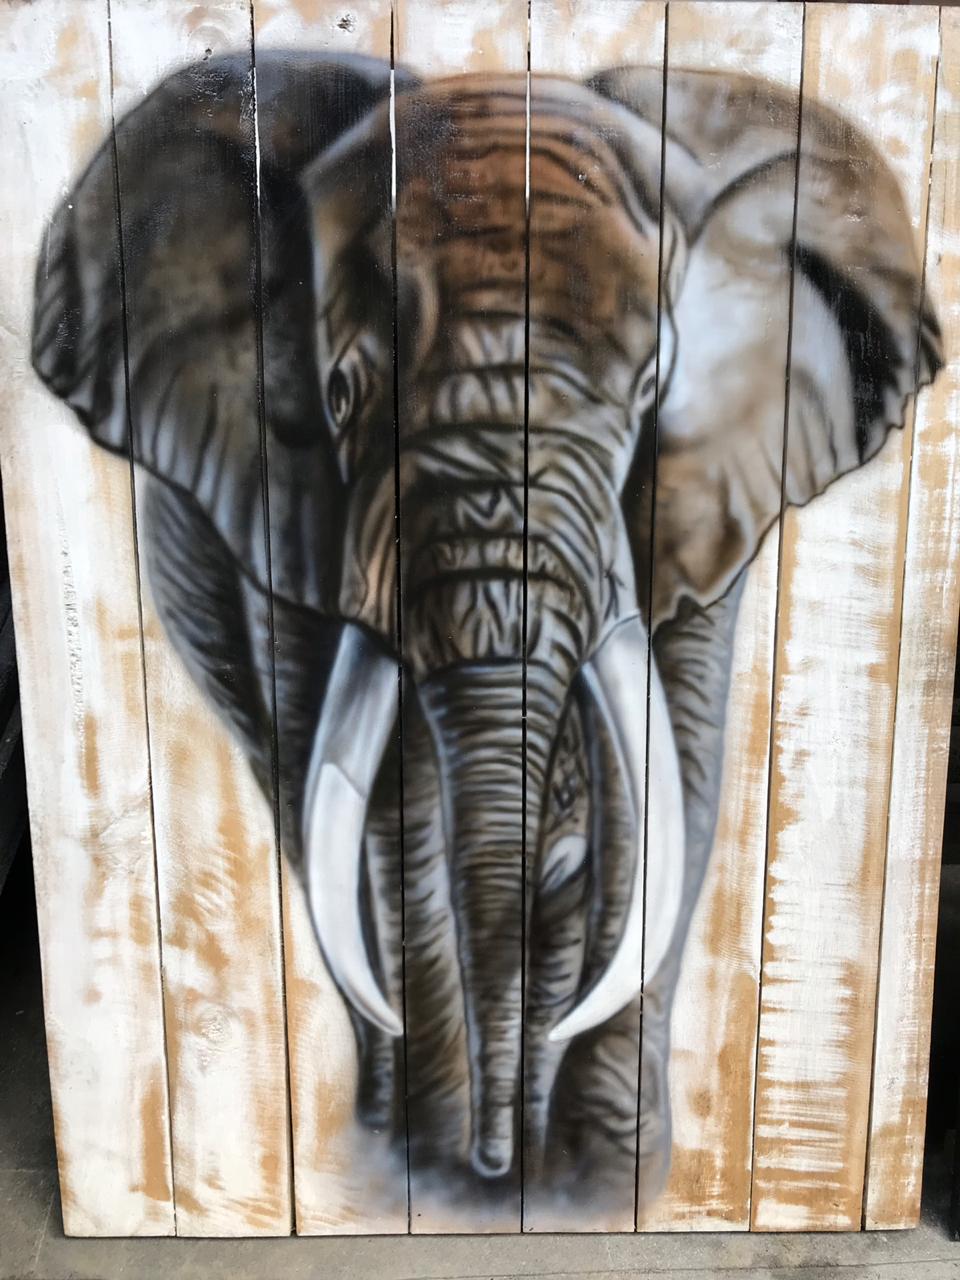 Elephant panting medium